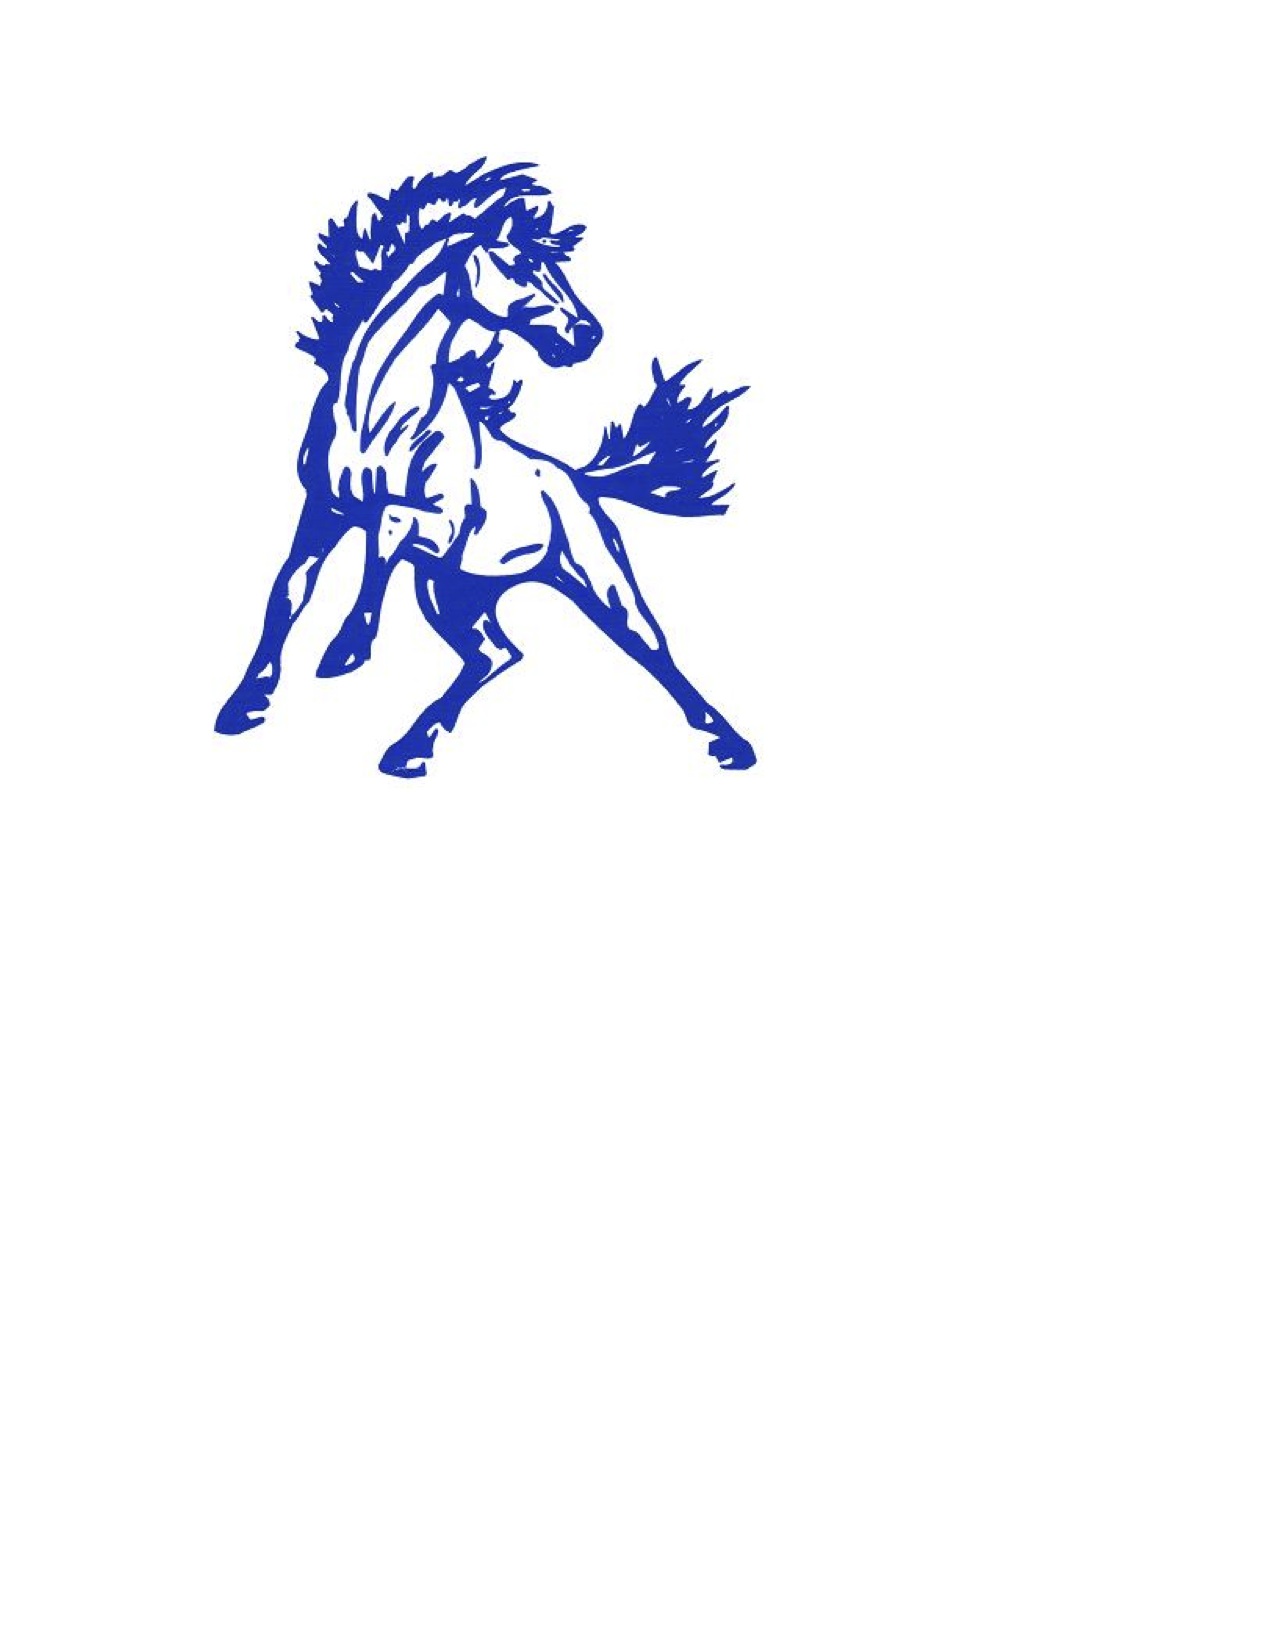 Mustang image - vector clip art online, royalty free & public domain